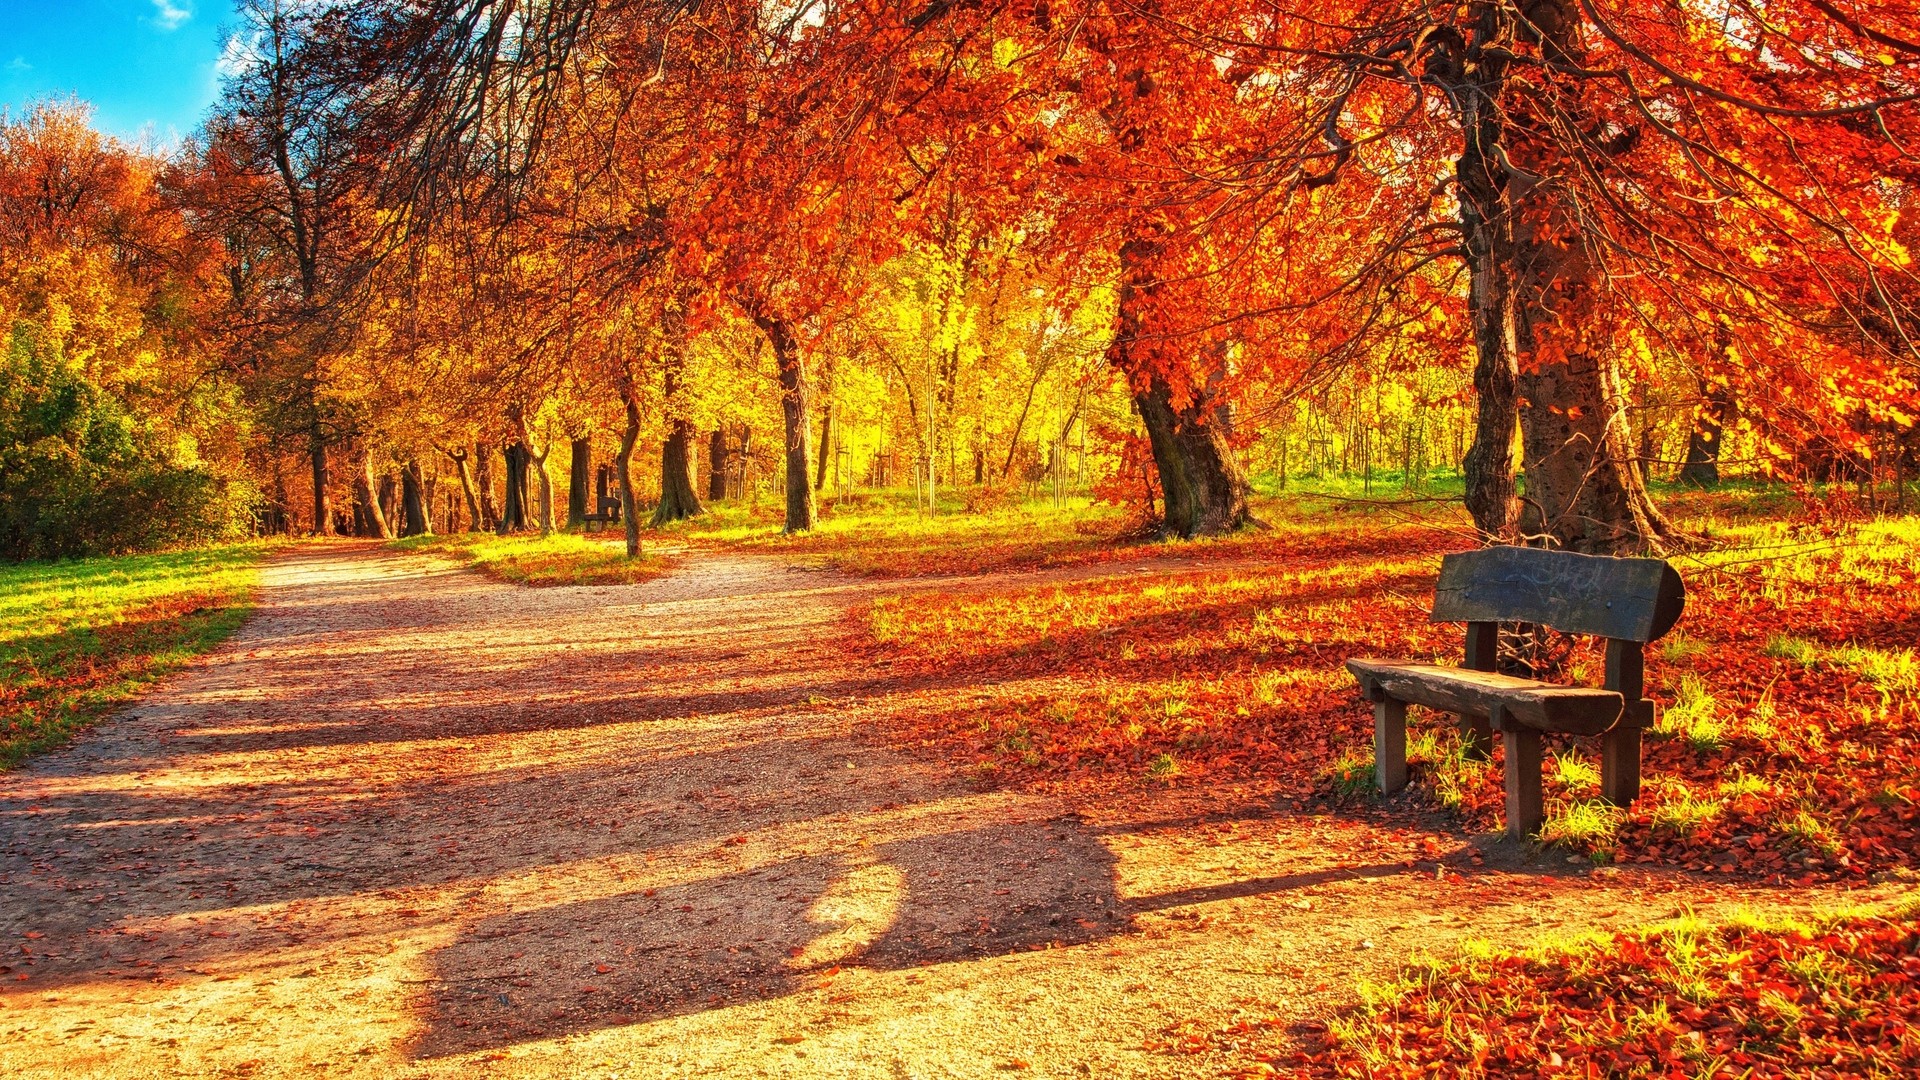 1920x1080 wallpapers: bench, autumn, park, foliage (image)